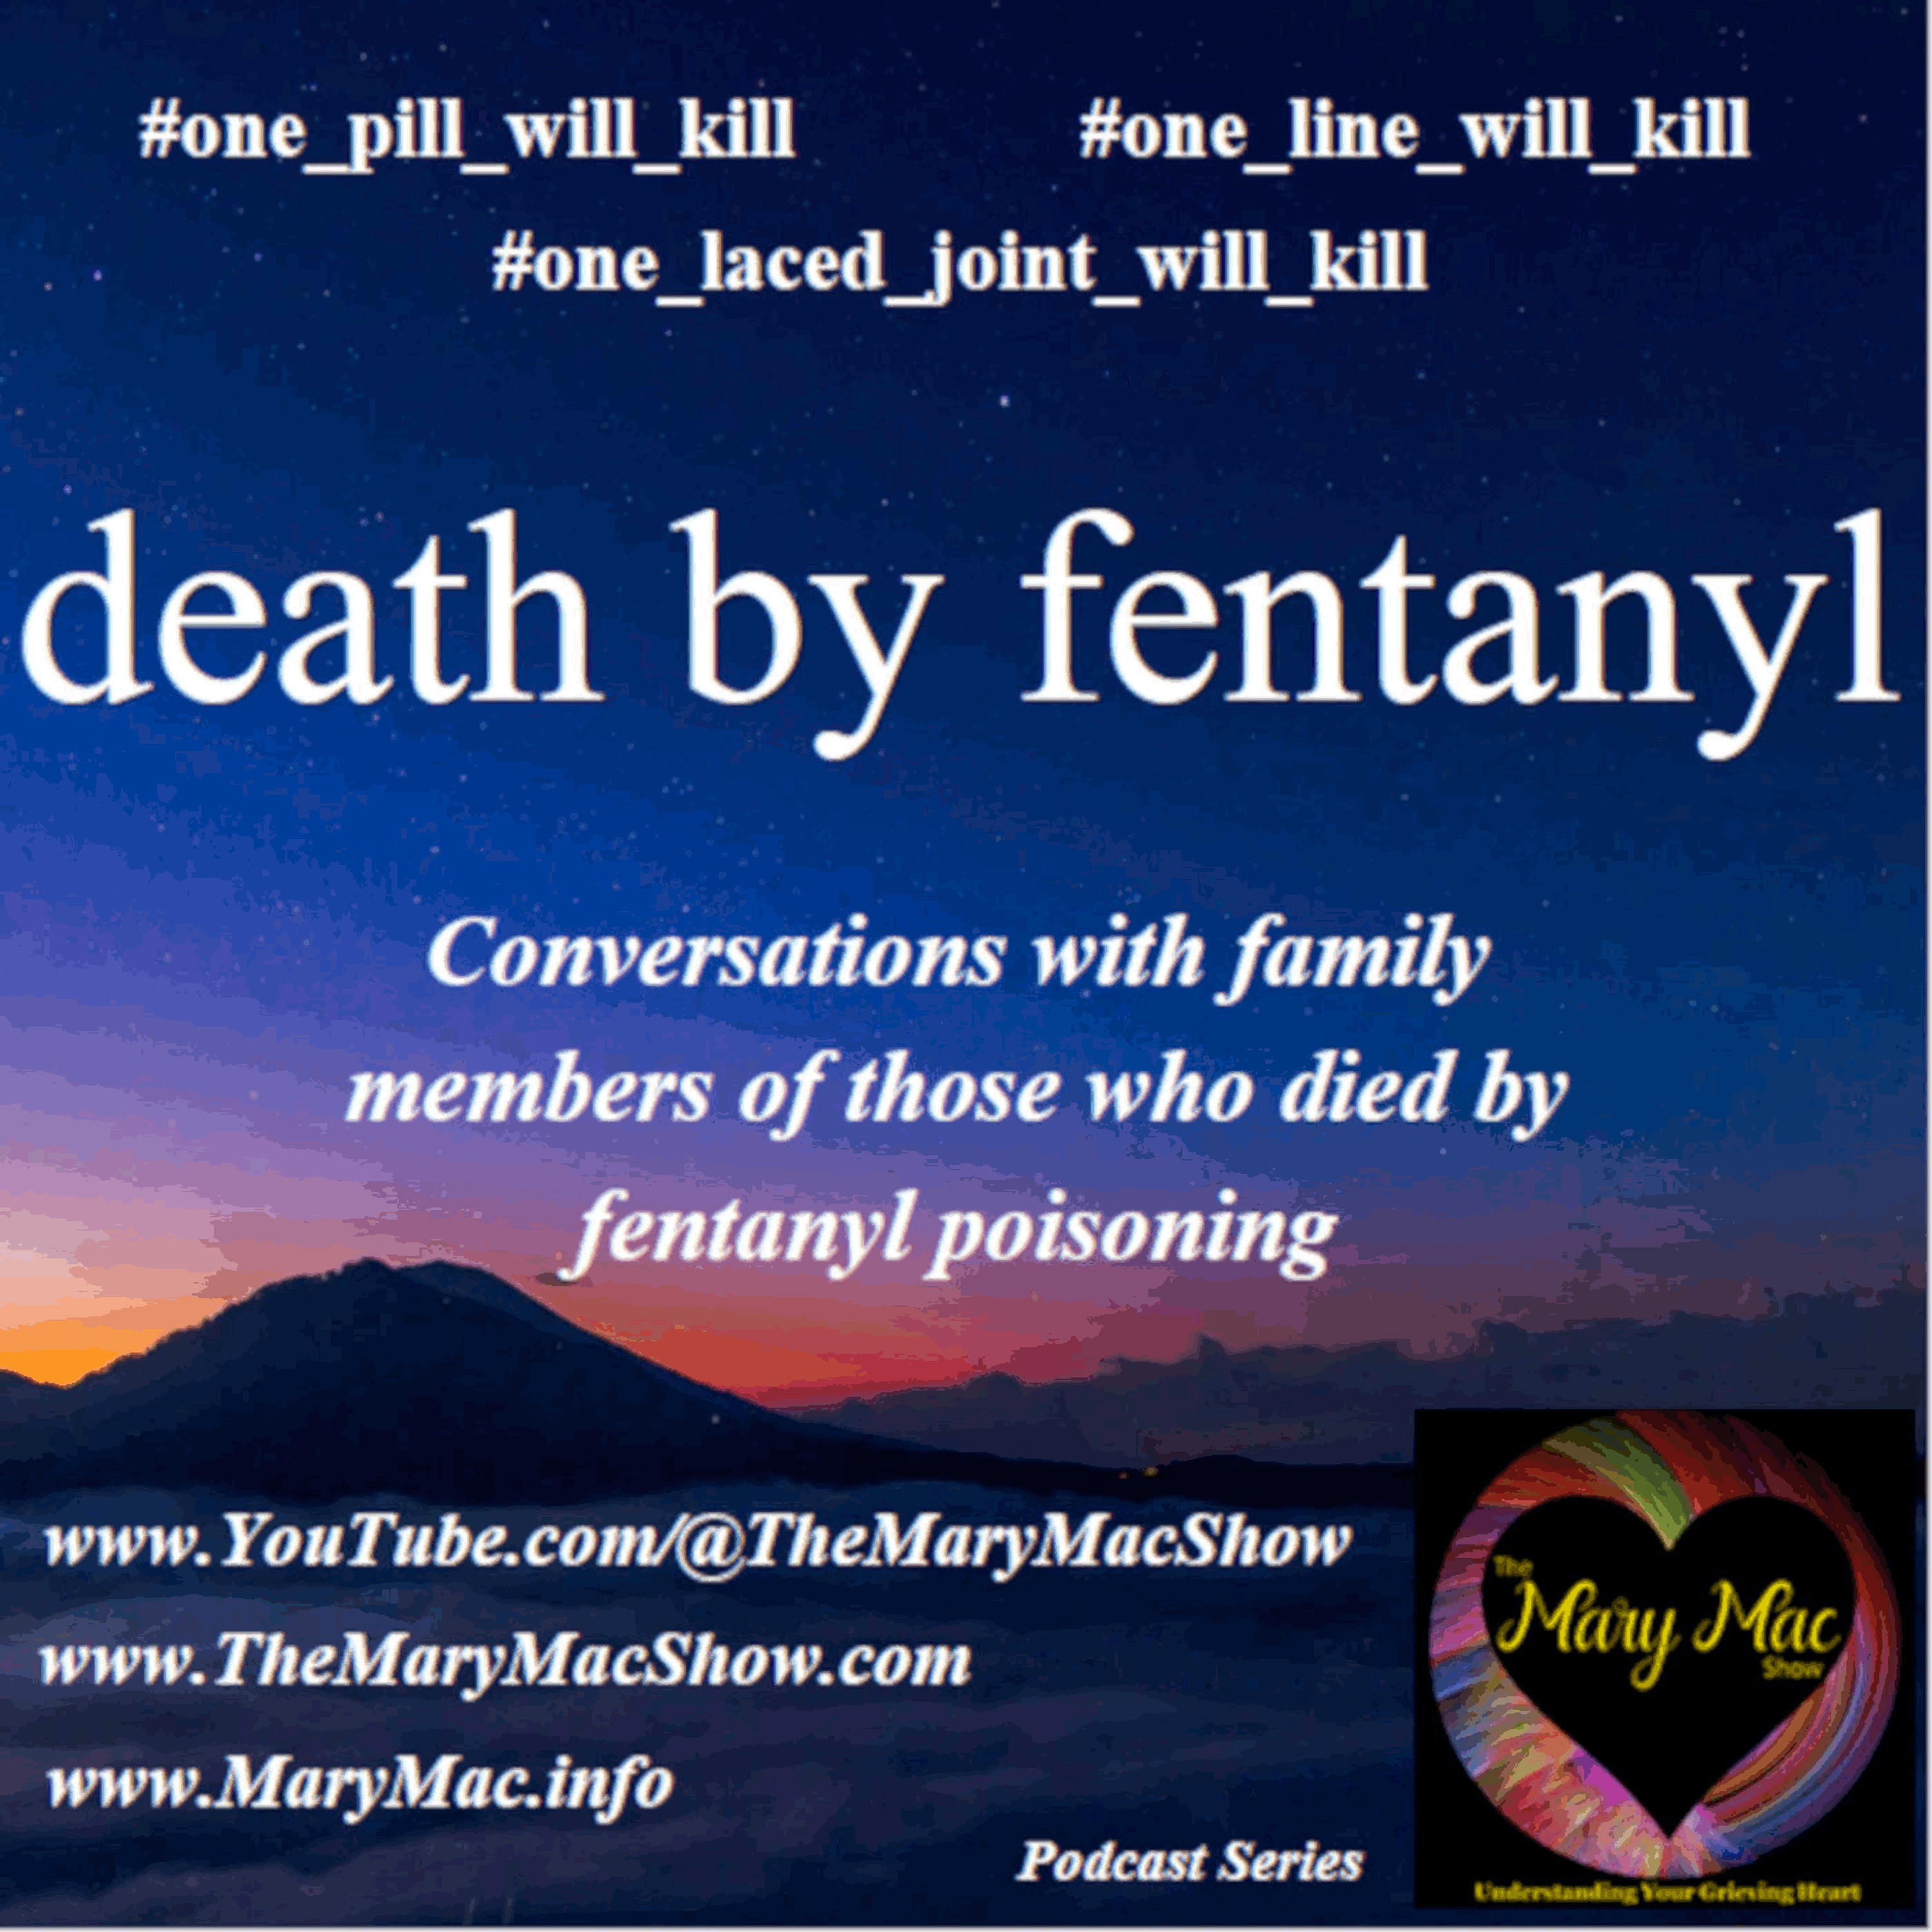 Death By Fentanyl Podcast Series | Ed Bisch's 18 yo Son Eddie killed by ONE OxyContin Pill